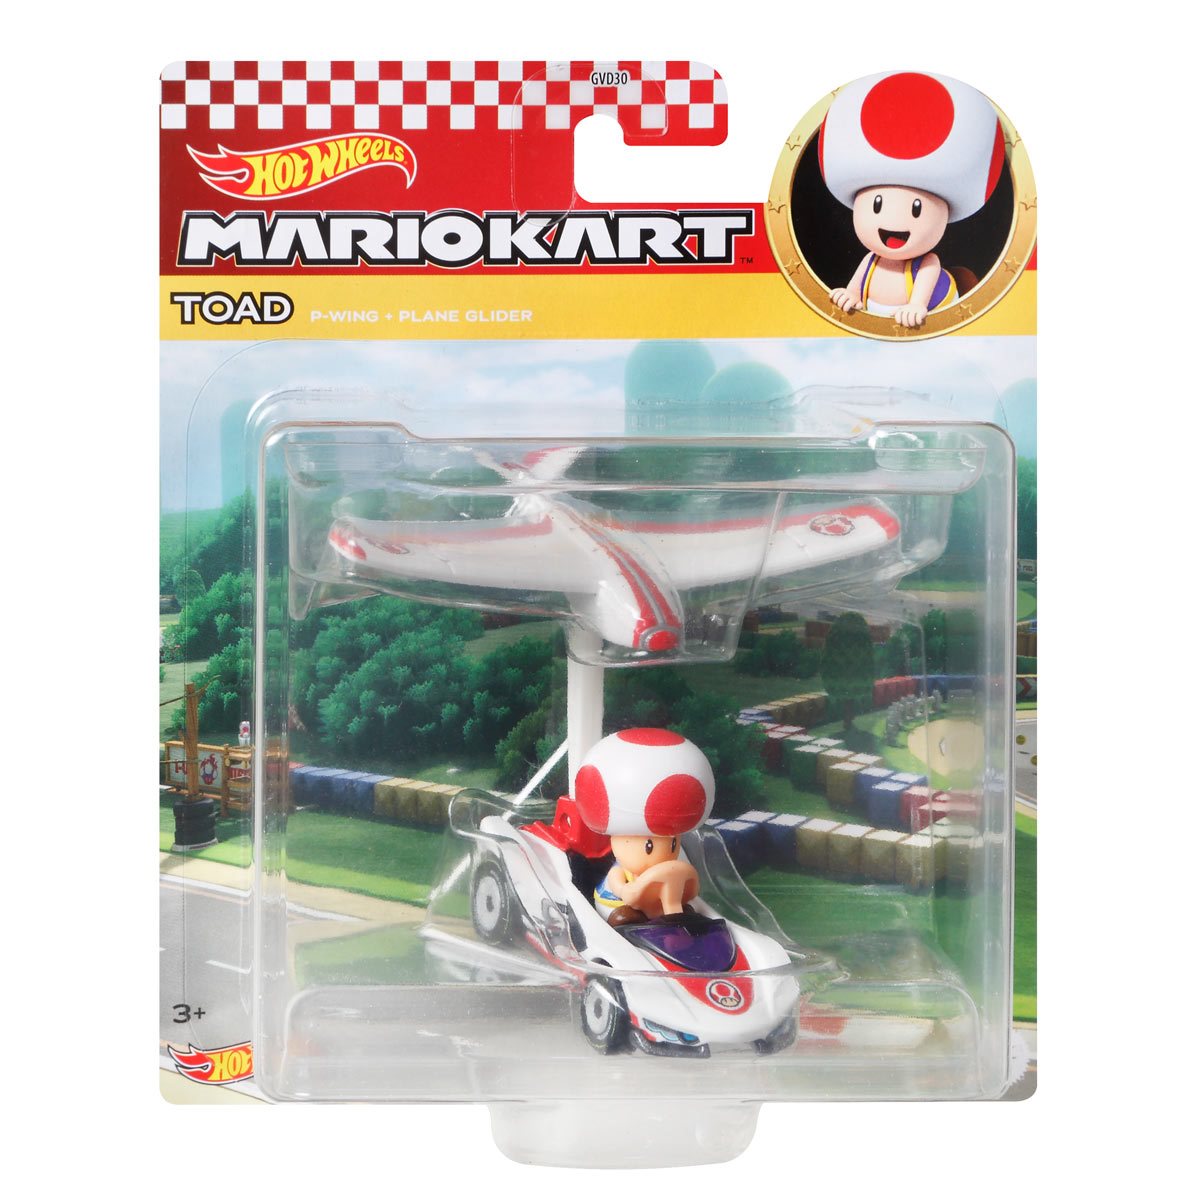 Mattel MTTGVD30 Hot Wheels Mario Kart Gliders Toys, Assorted Color - Set of  8